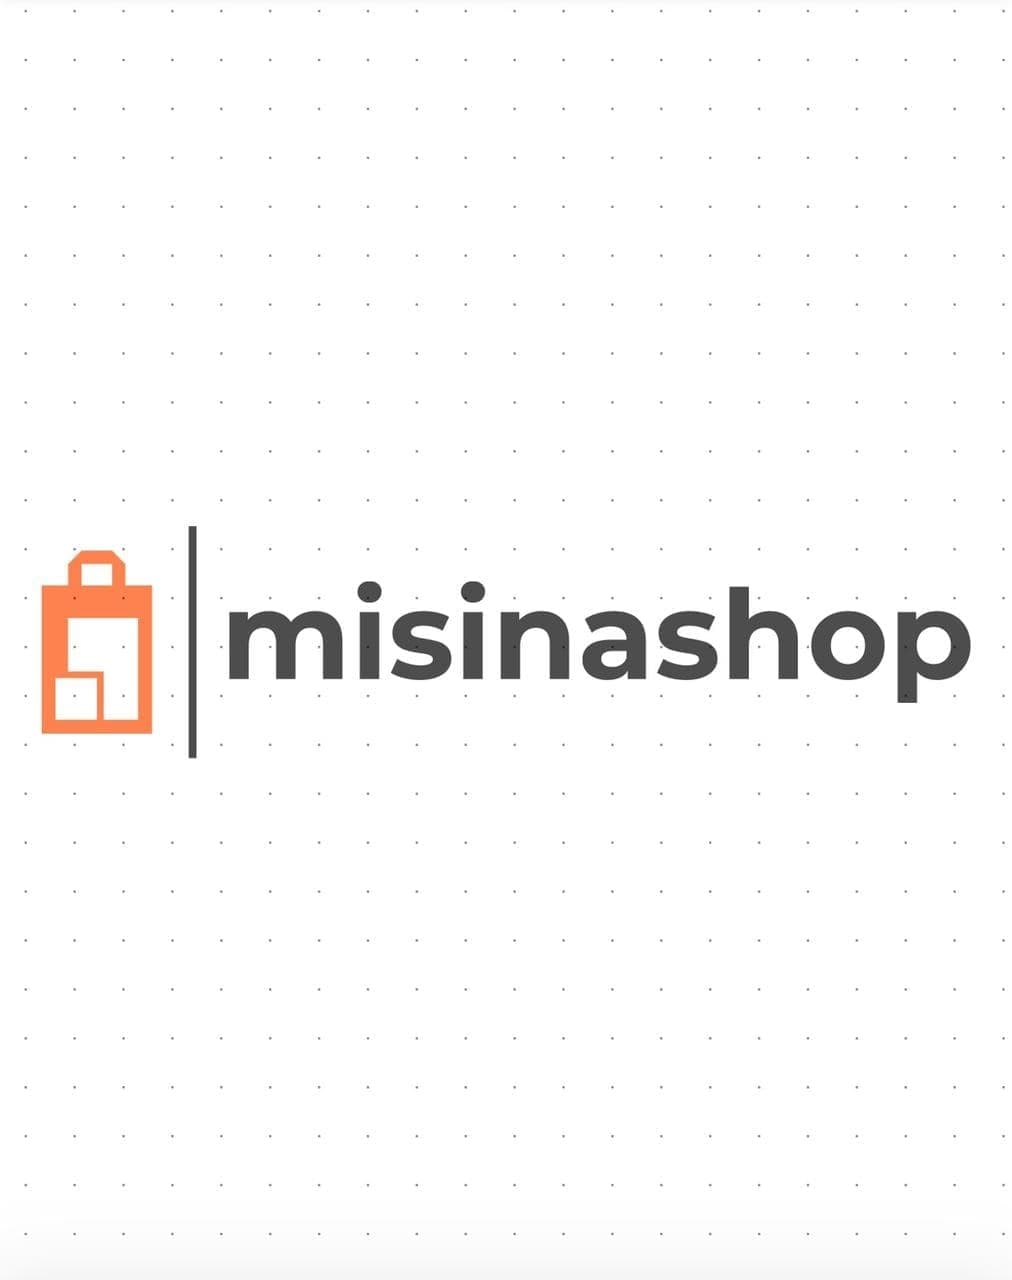 MisinaShop